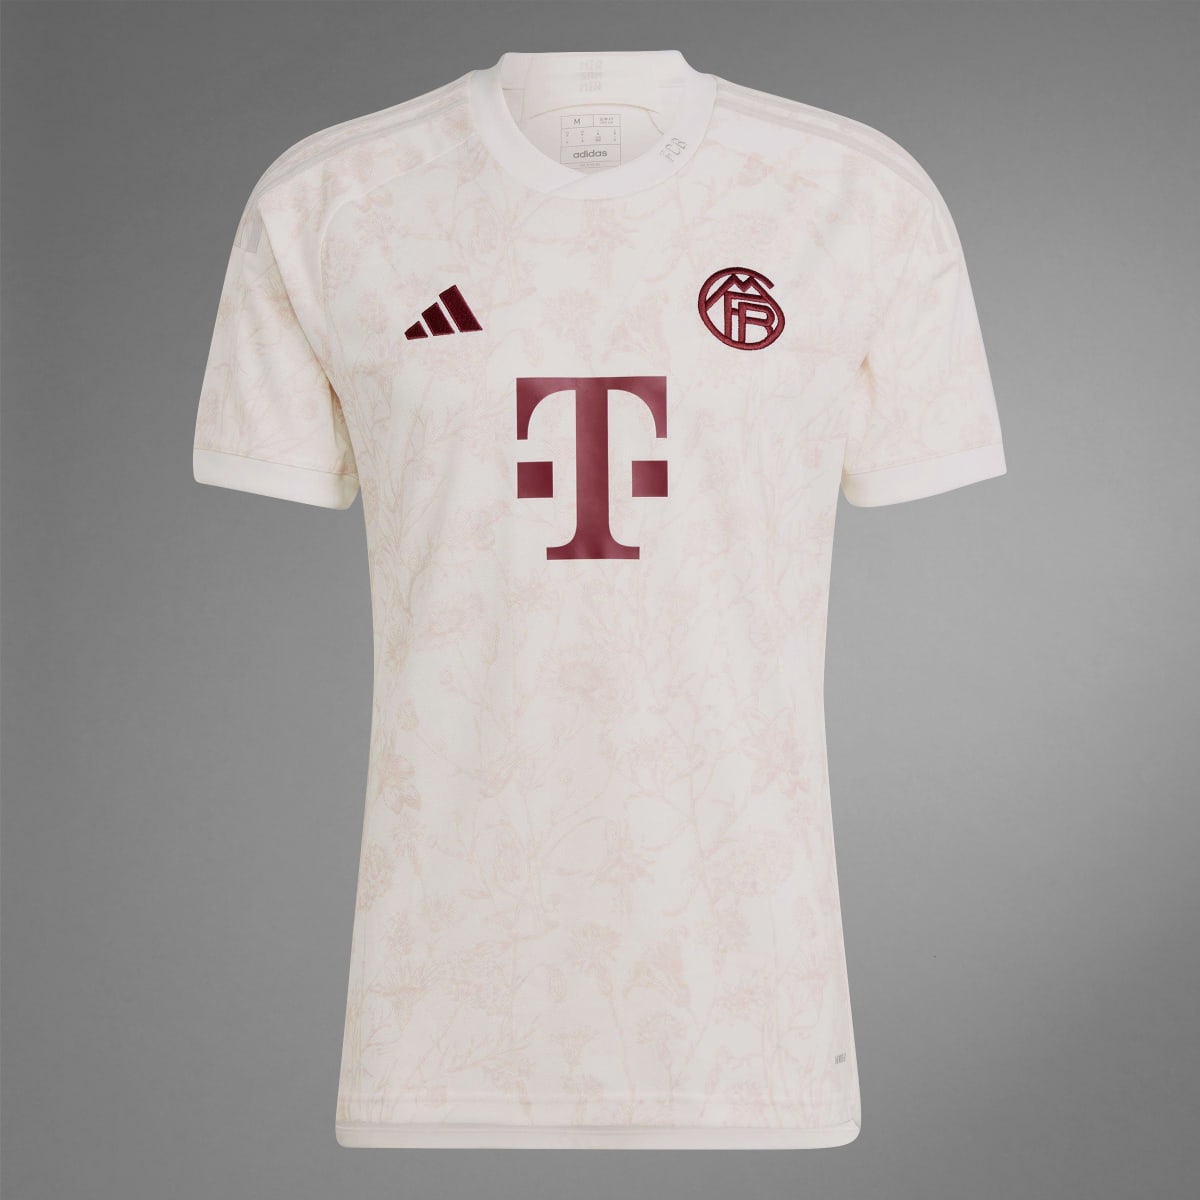 Adidas Camisola do Terceiro Equipamento 23/24 do FC Bayern München. 10